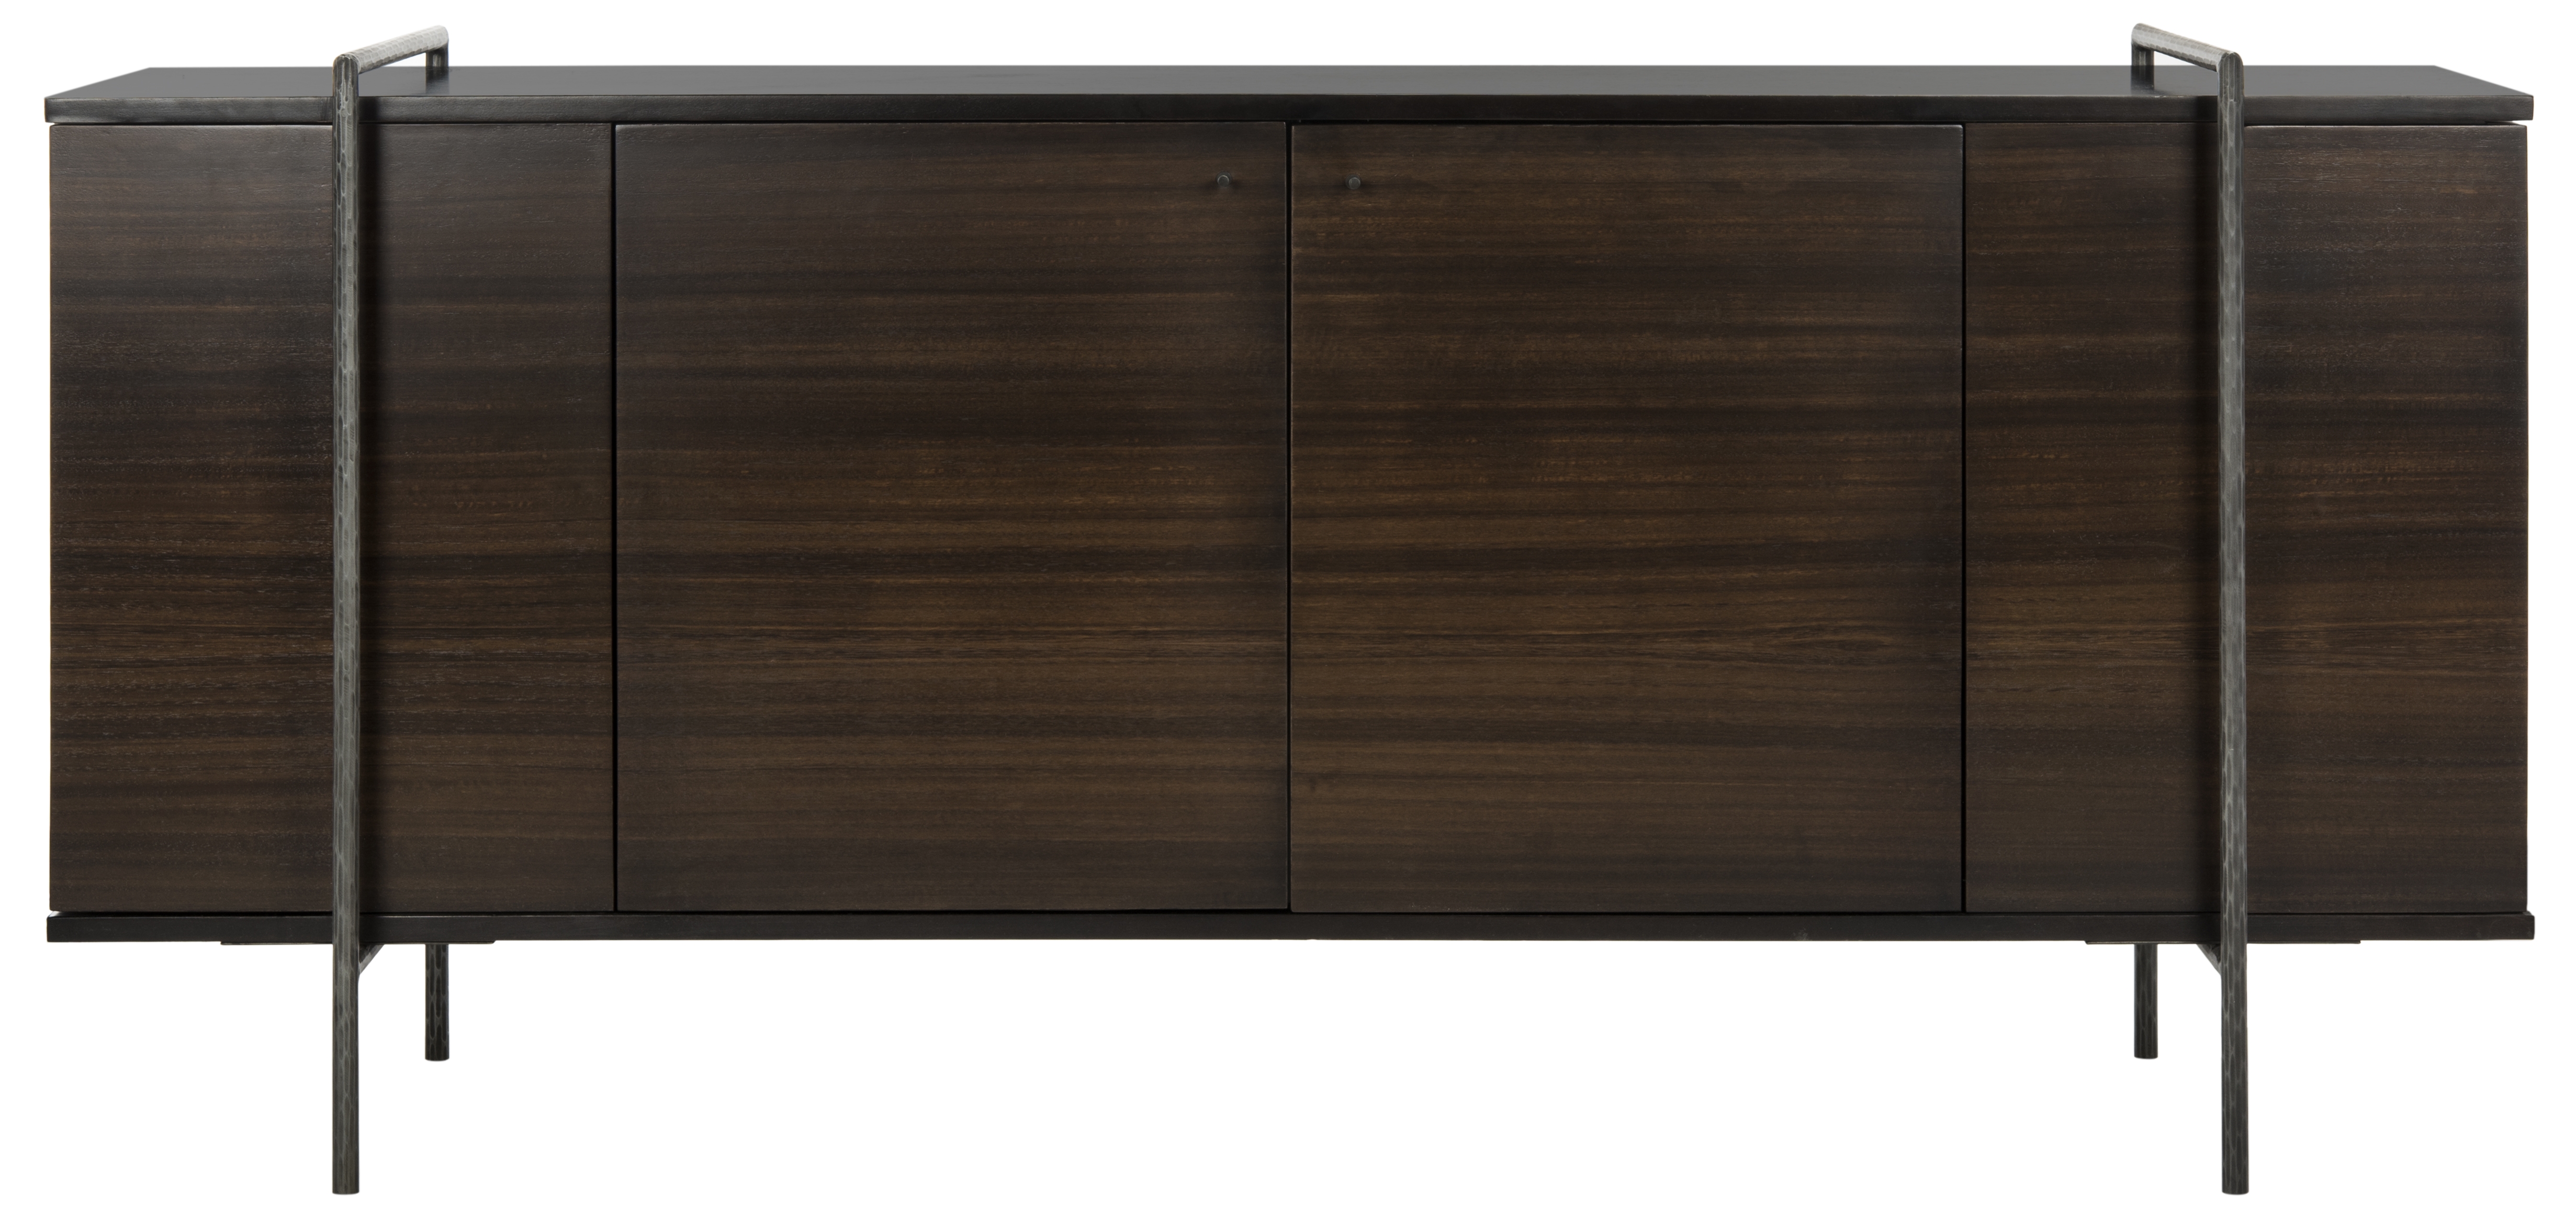 Baxton Wood Sideboard - Brown/Black - Arlo Home - Image 0